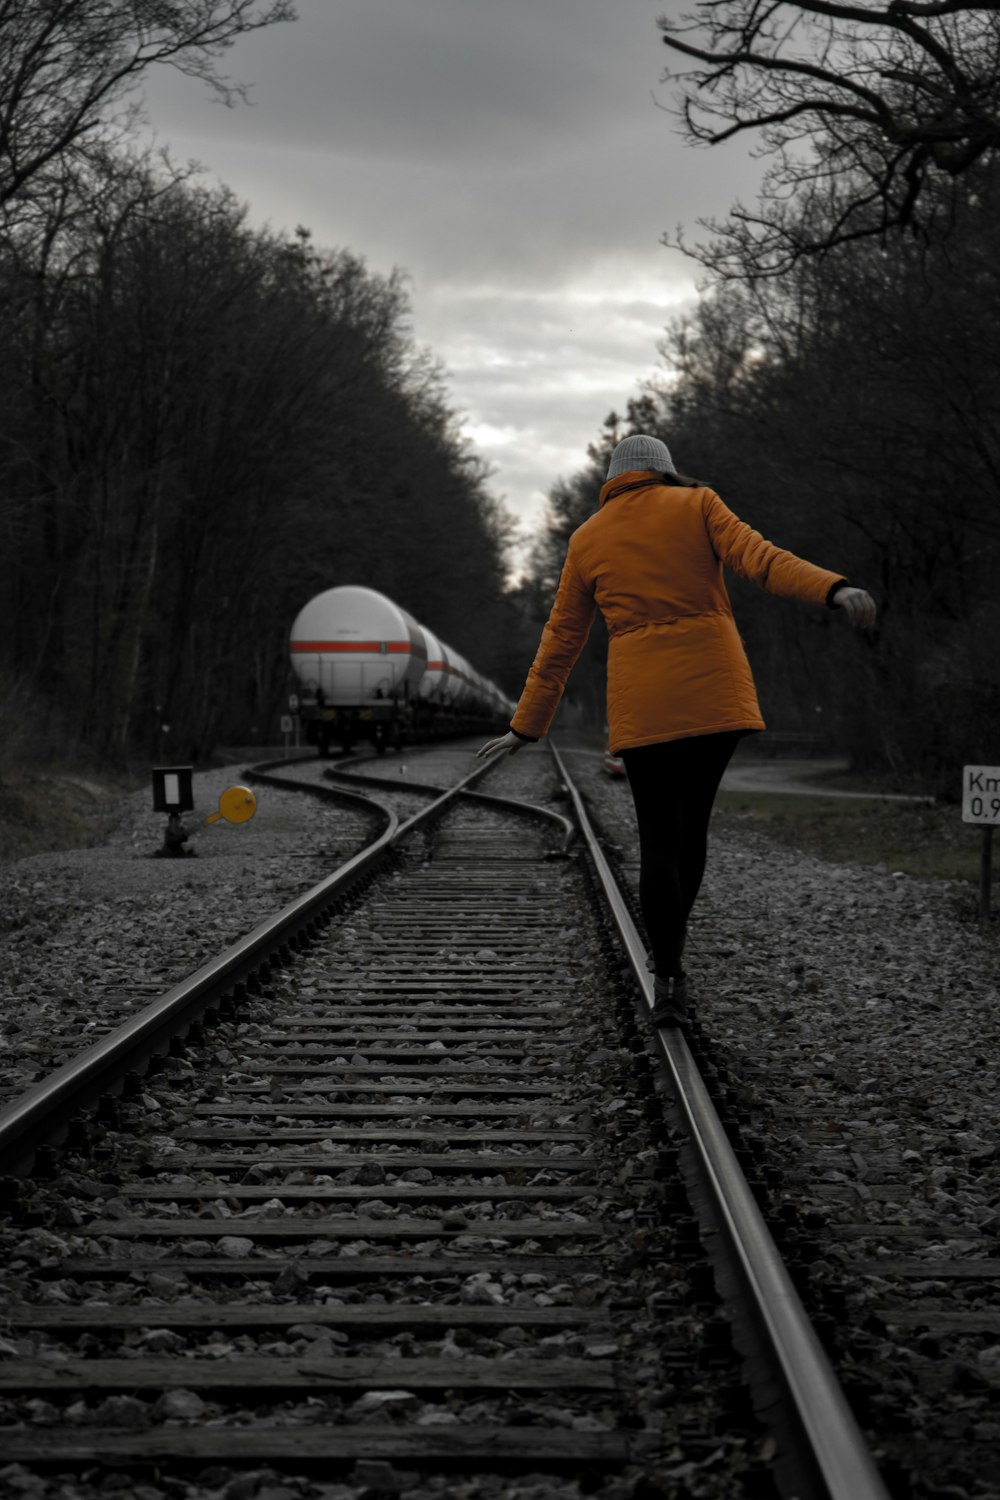 a woman walking down a train track next to a train